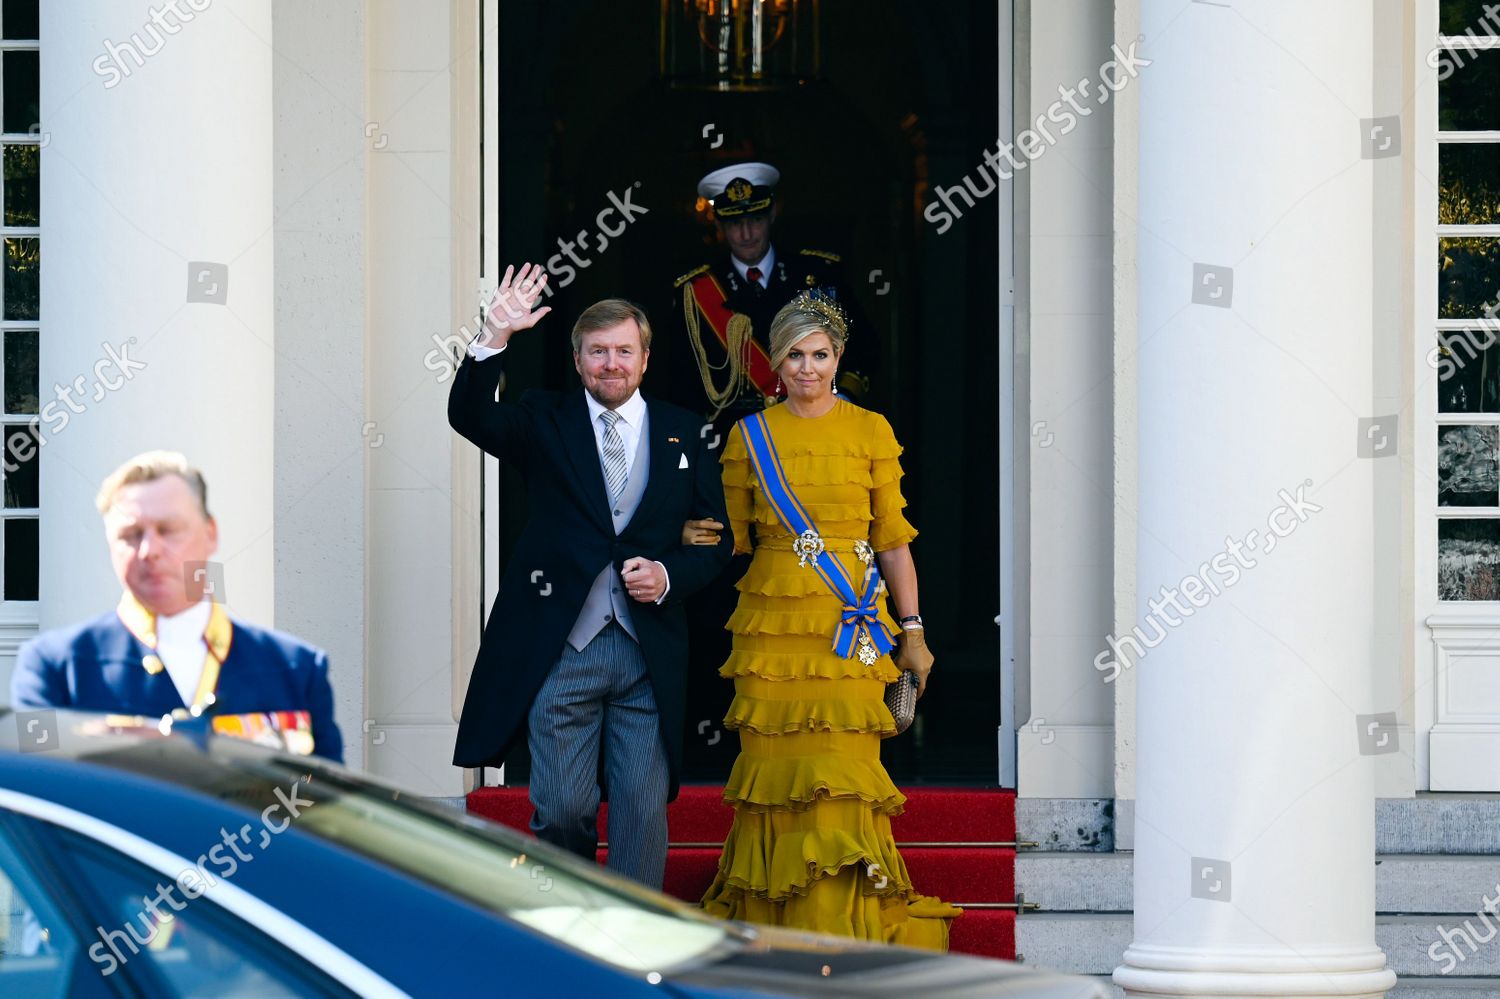 prinsjesdag-ceremony-the-hague-the-netherlands-shutterstock-editorial-10777335d.jpg